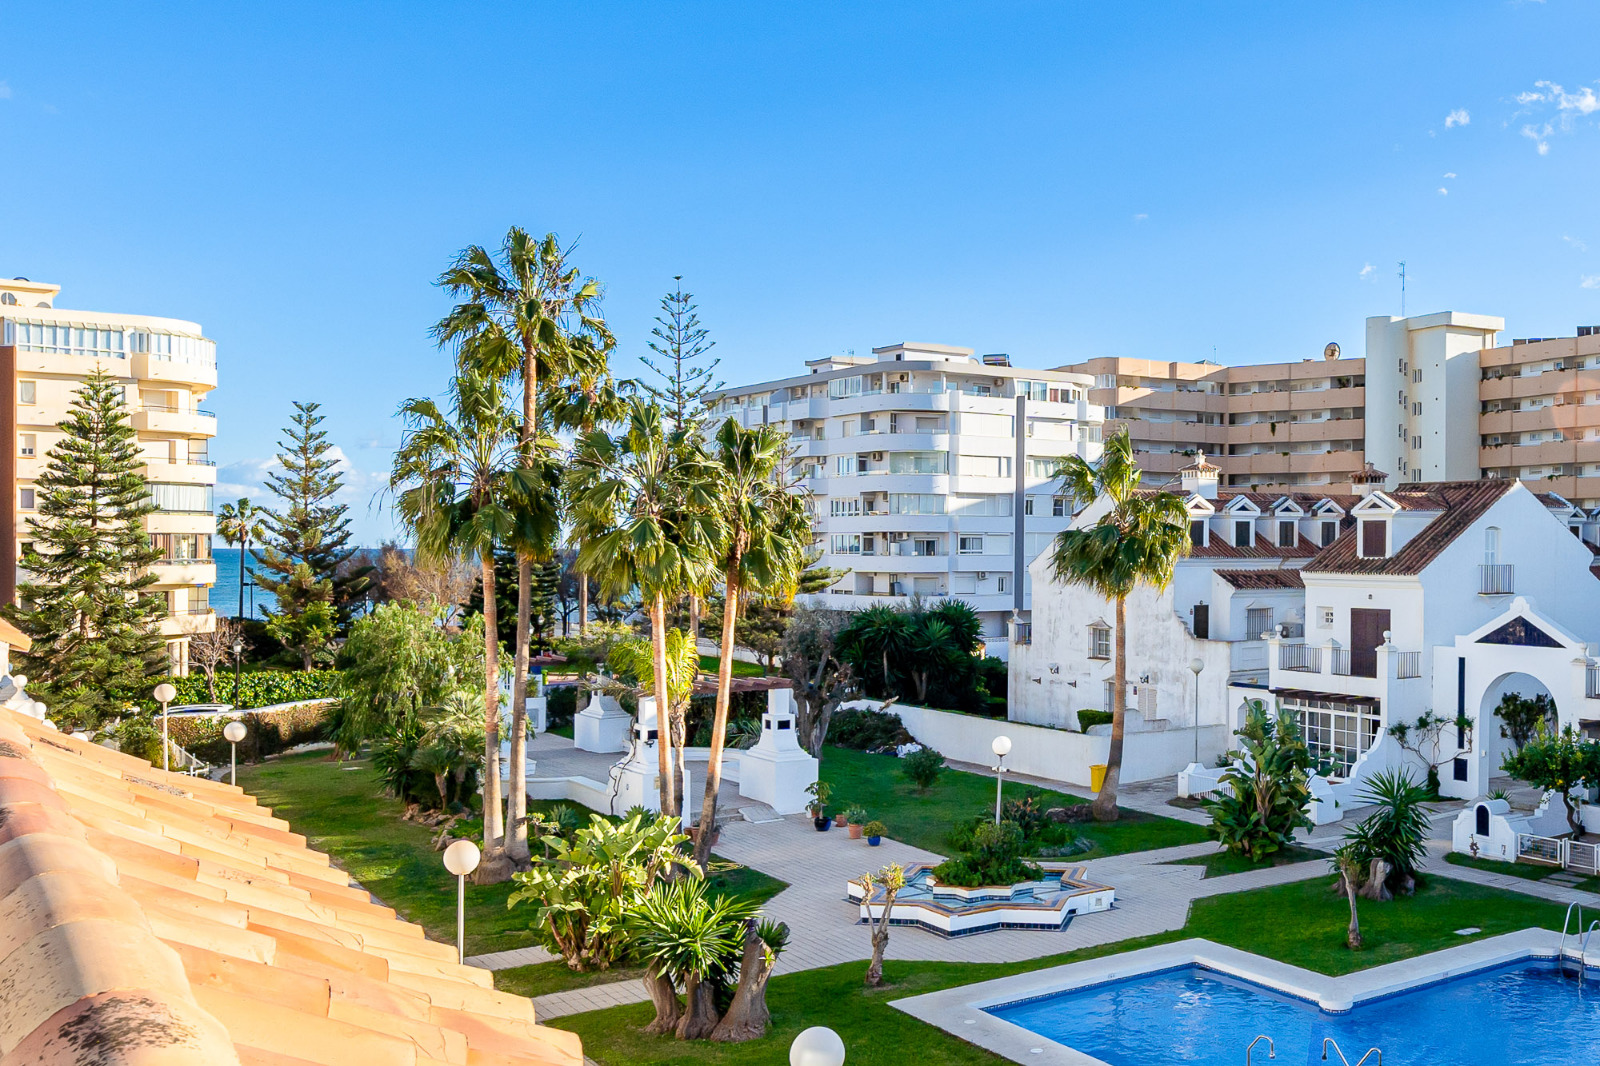 Malaga, de beste stad ter wereld